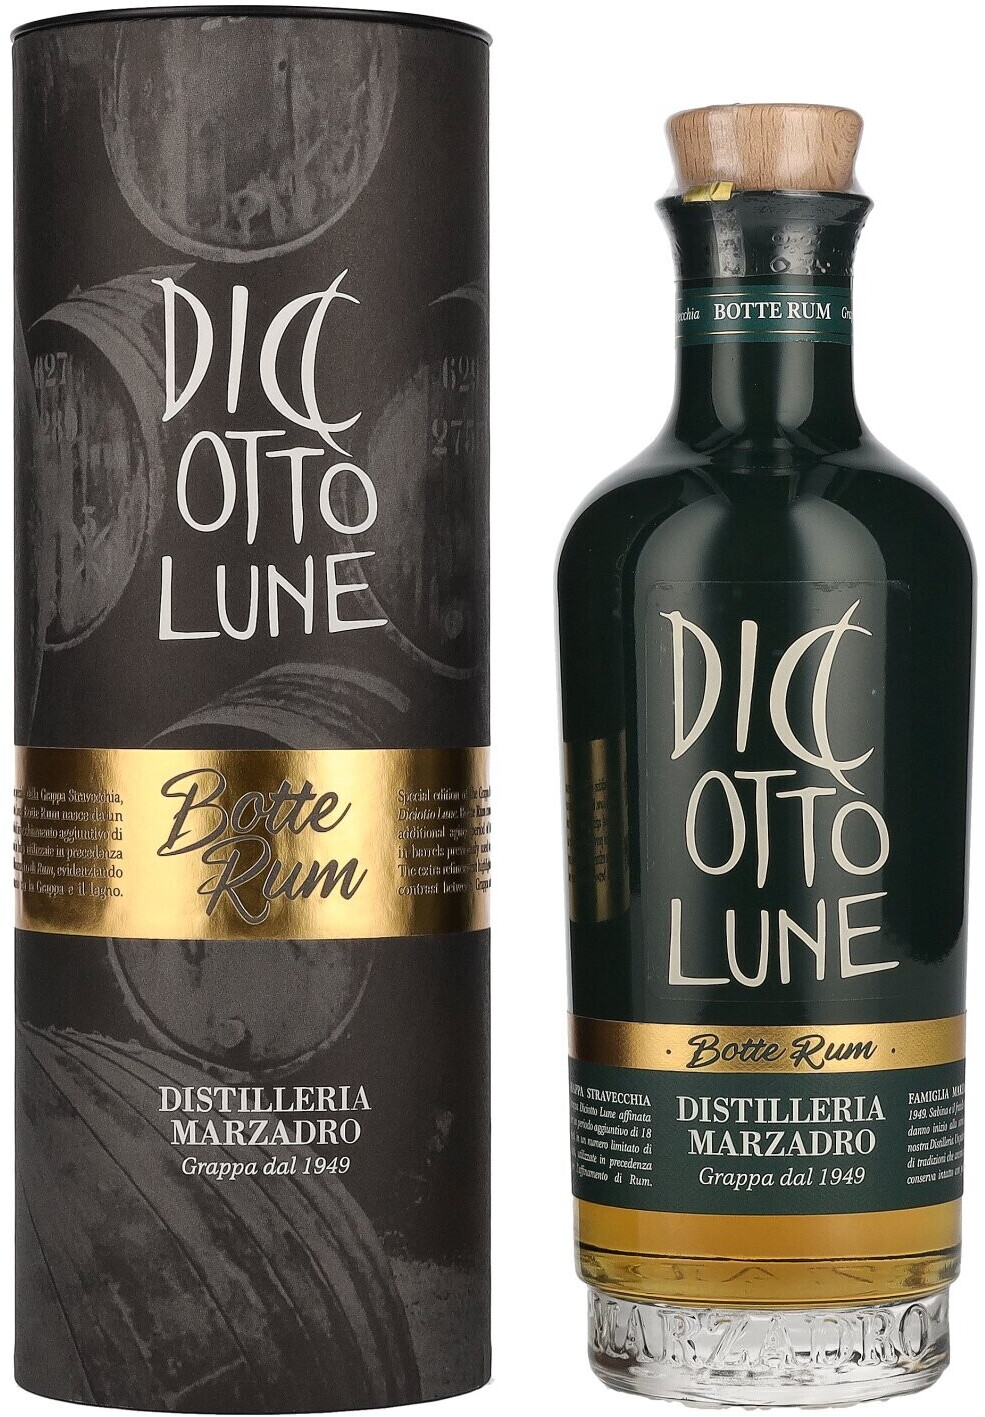 Marzadro Diciotto Lune Botte Rum 0,5l 42% ab € 26,90 | Preisvergleich bei